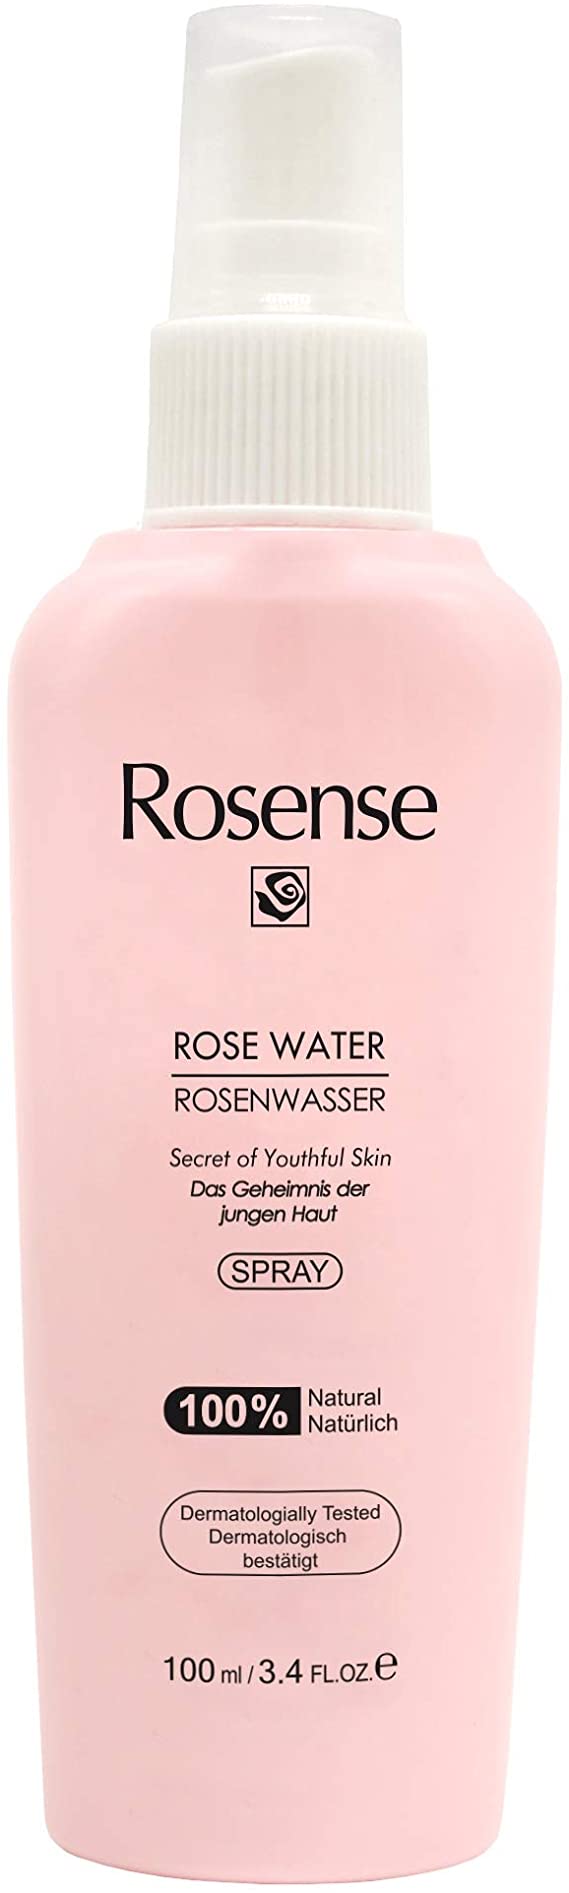 Rosense Rose Water, 100% Natural, Vegan, 100 ml